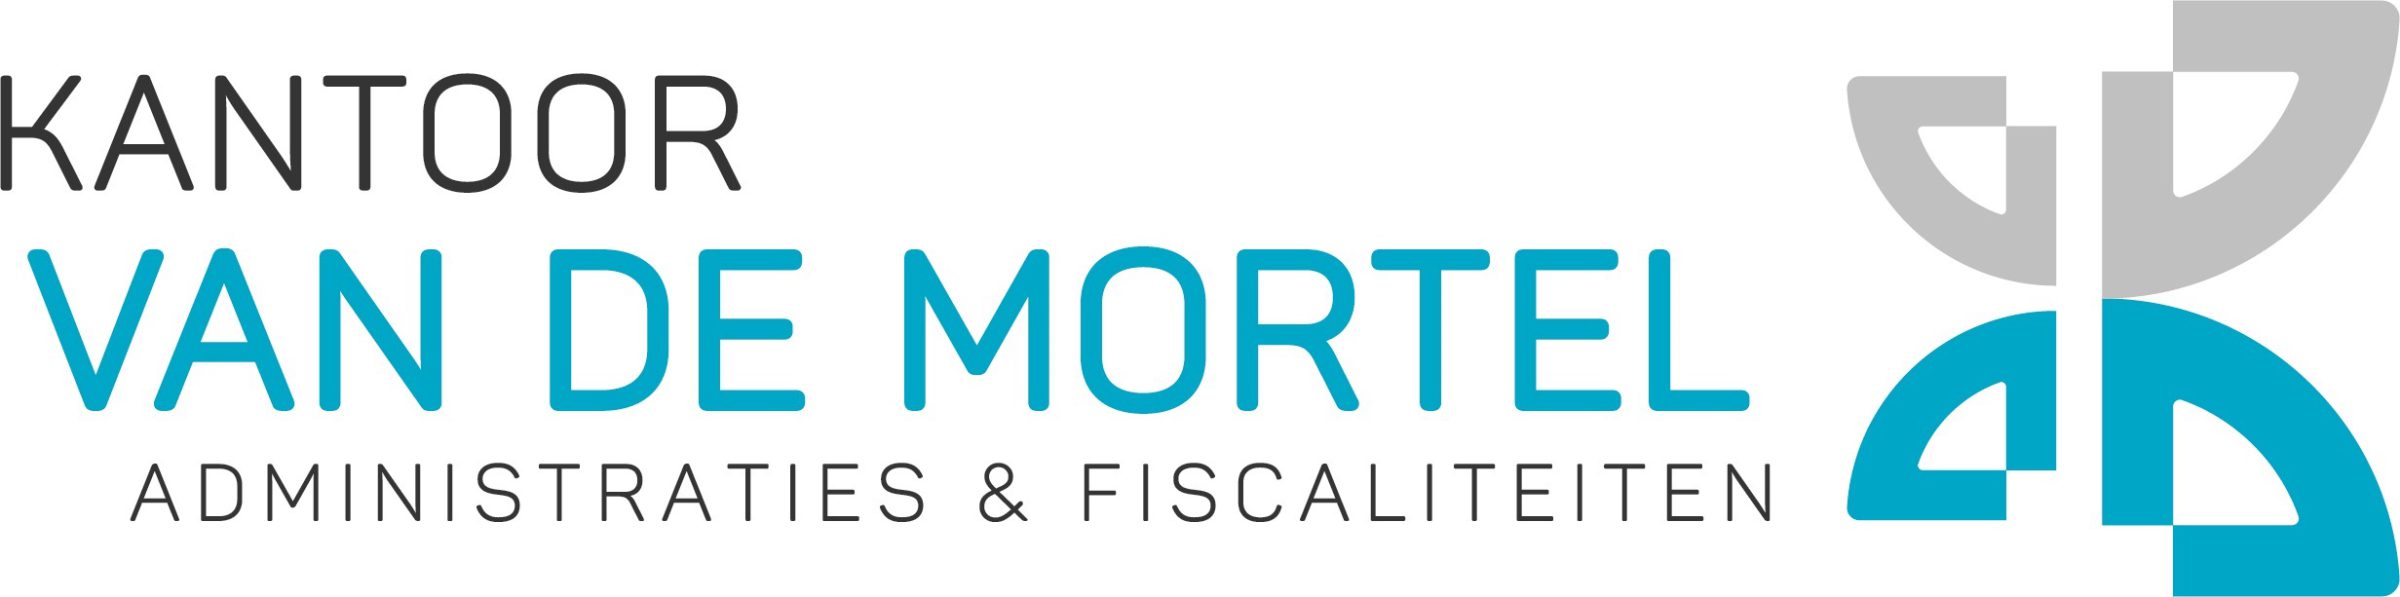 Kantoor van de Mortel, administrations & taxation, logo